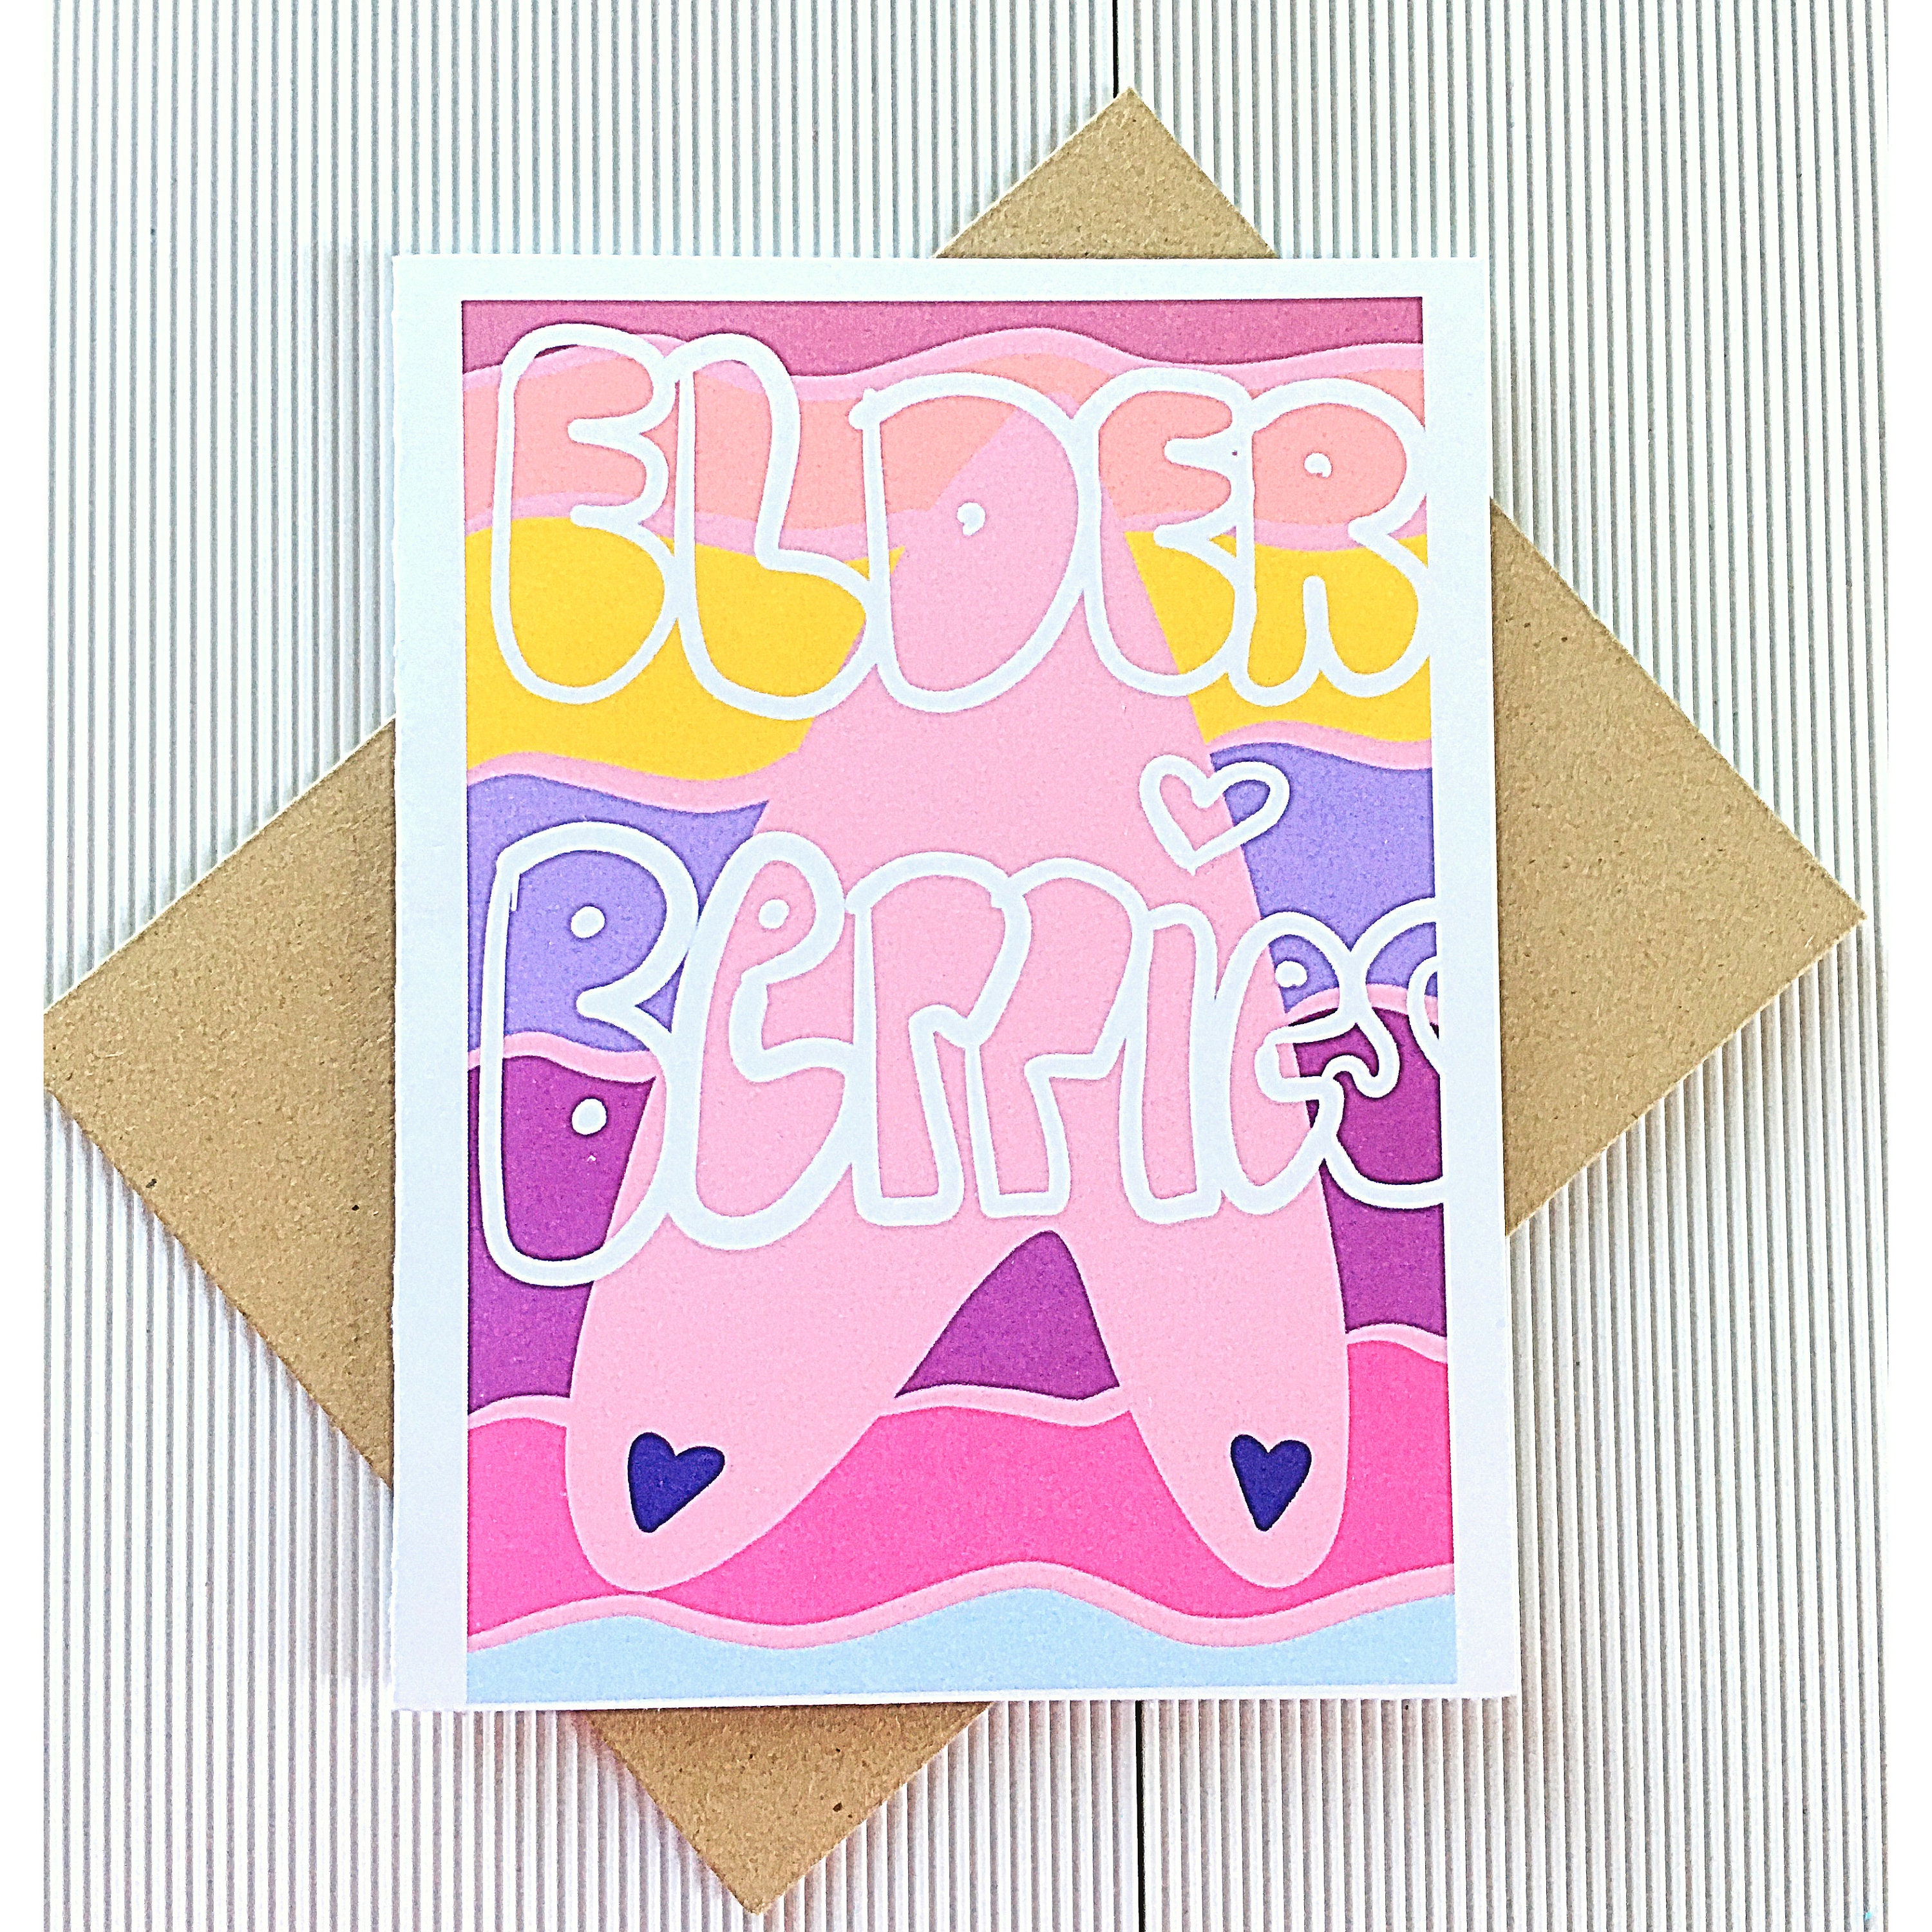 Pair of Boobs Pop-up Birthday Adult Birthday Card -  Canada